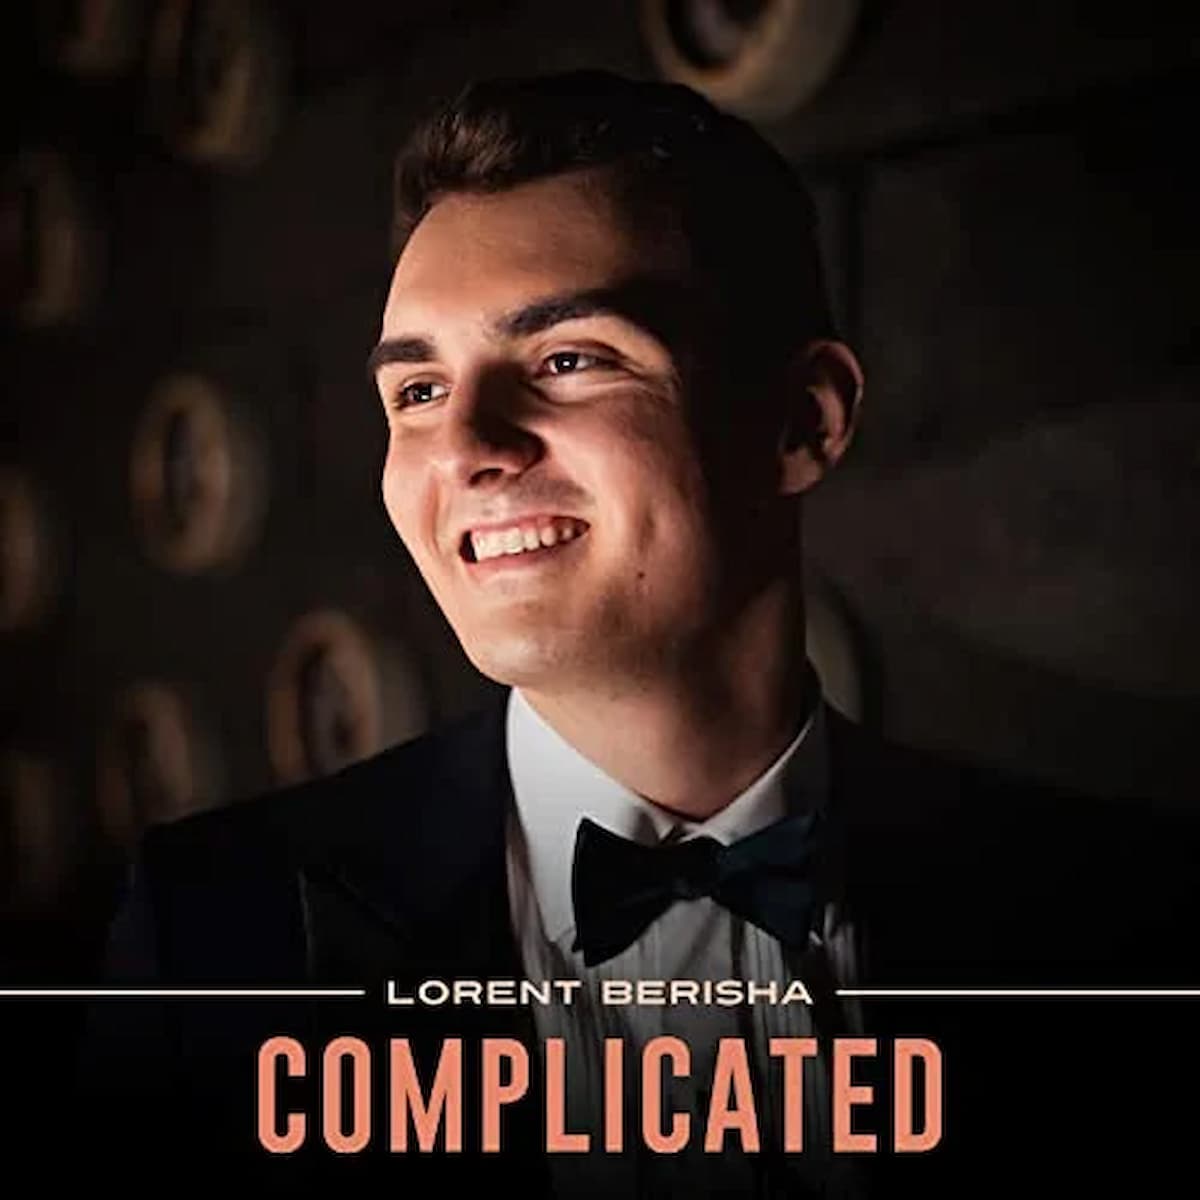 Lorent Berisha - Complicated - DSDS 2023 Sieger-Song, Final-Song - hier im Bild das Single-Cover mit Lorent Berisha im Portrait